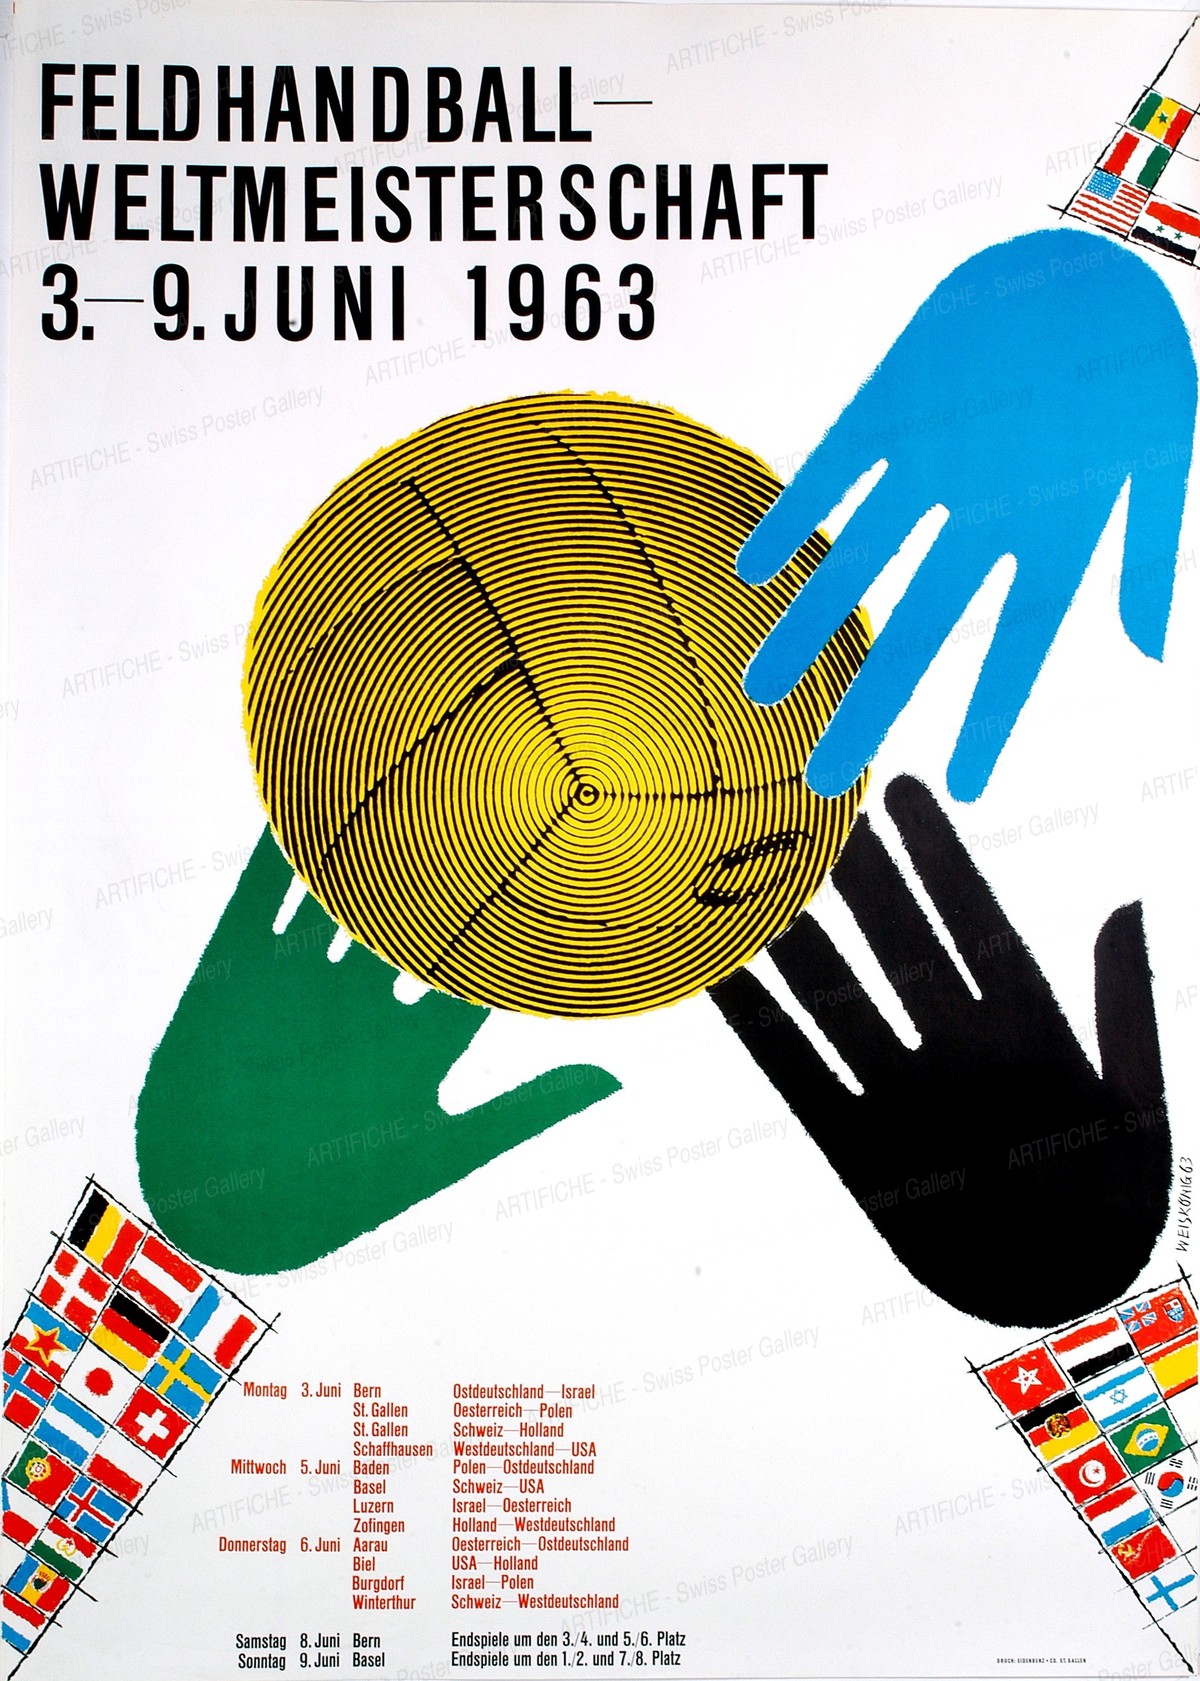 Feldhandball-Weltmeisterschaft 3.-9. Juni 1963, Werner Weiskönig